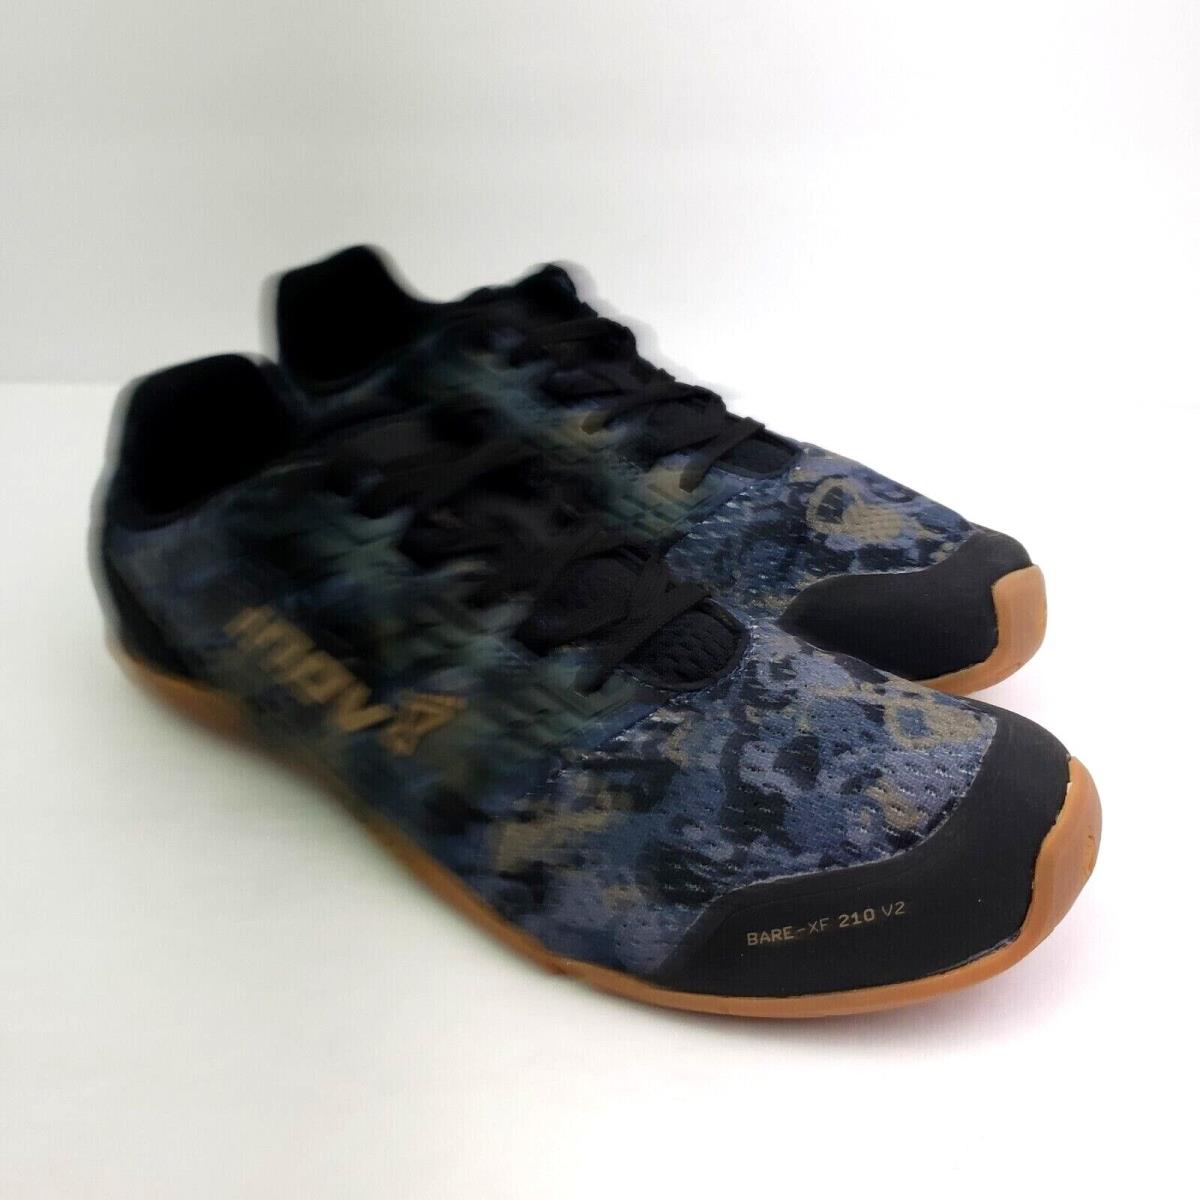 Inov-8 Bare-xf 210 Womens Size 8 Mens 6.5 Grey Camo Gum Running Training Shoes